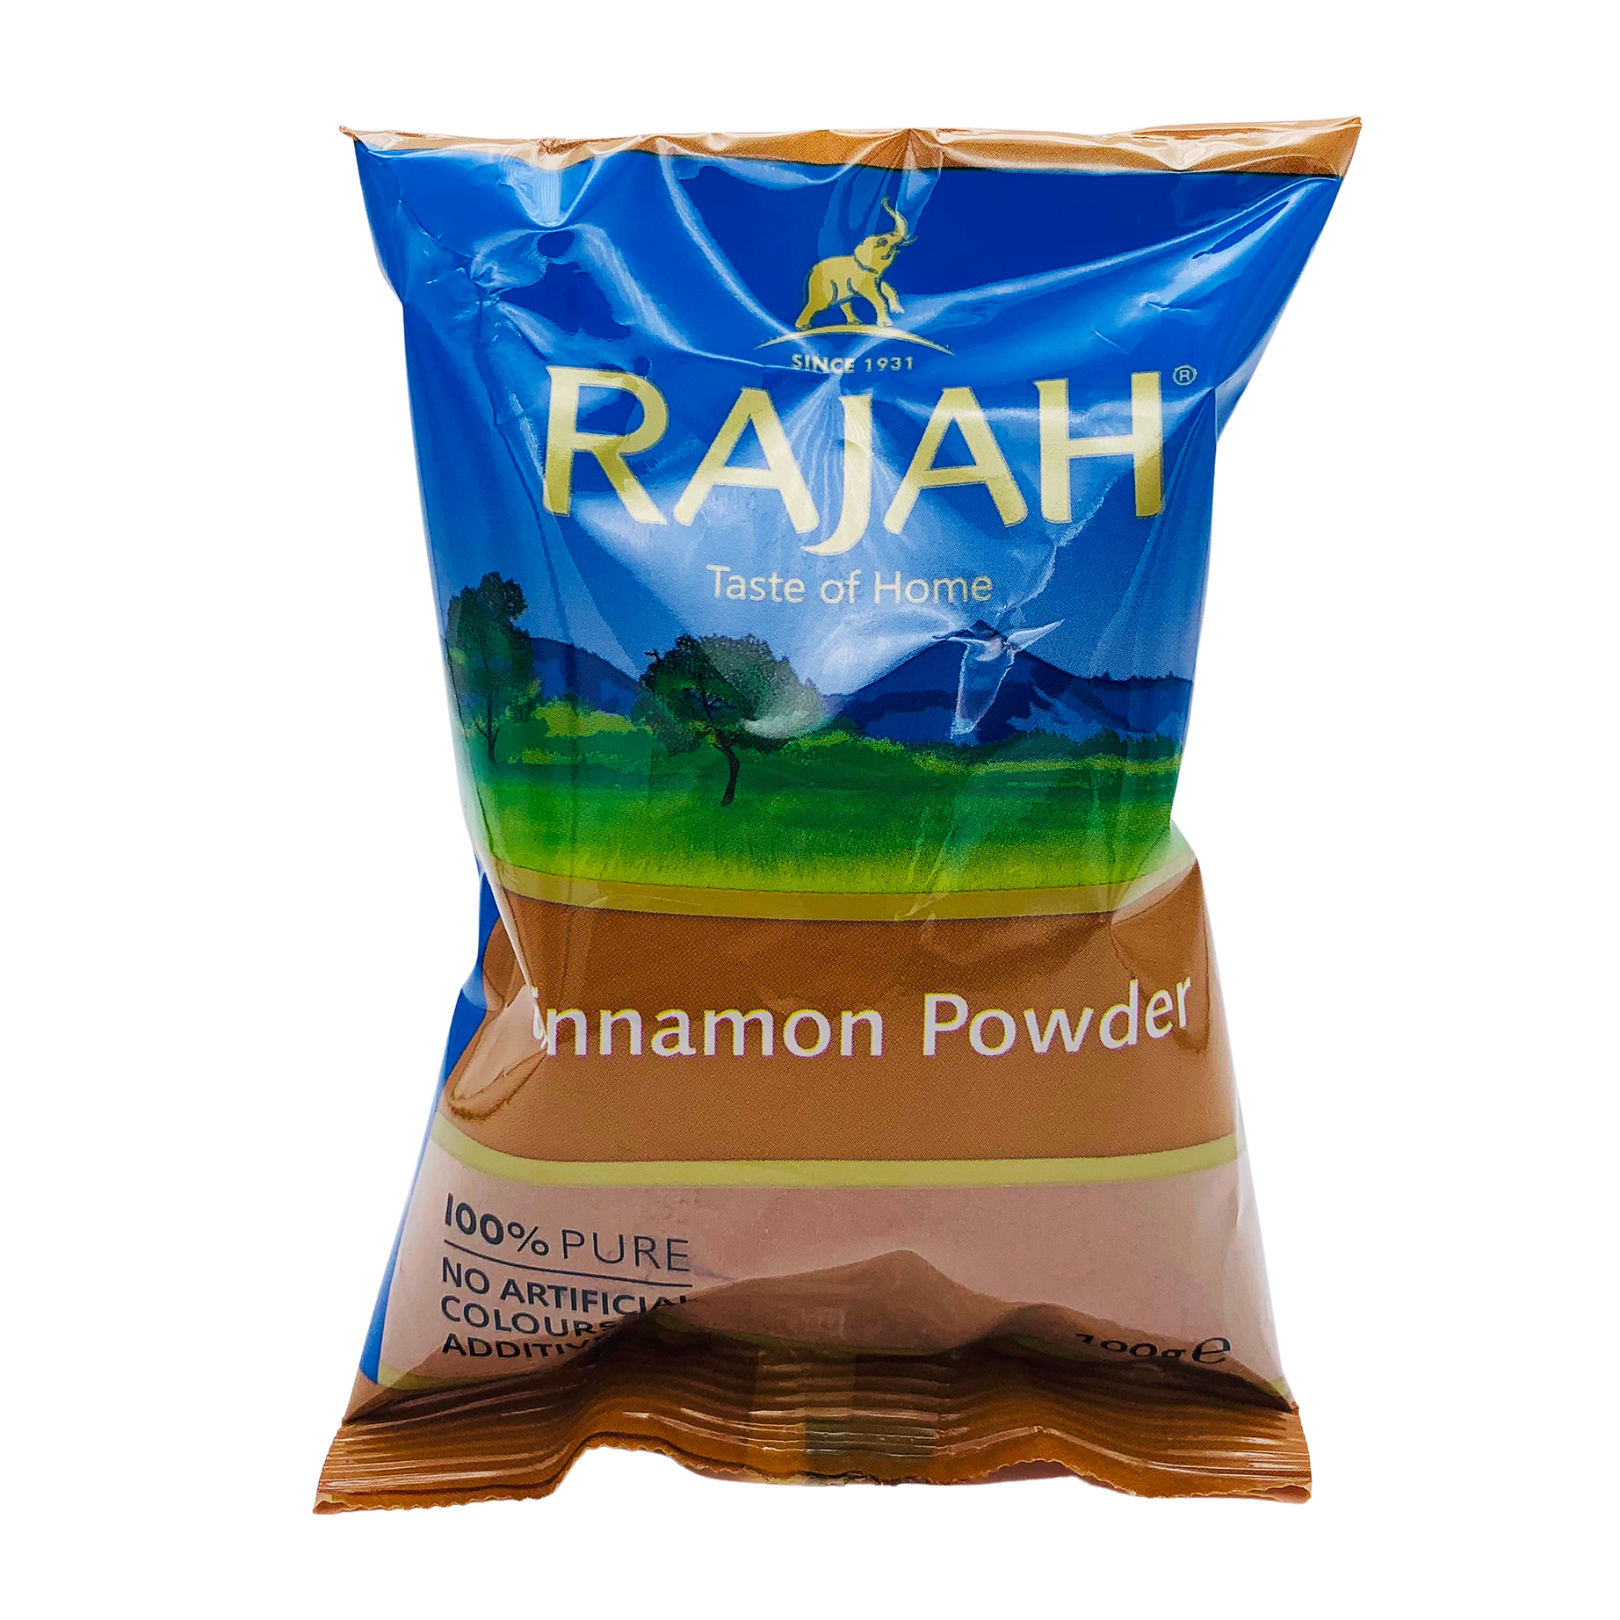 Cinnamon Powder 100g by Rajah